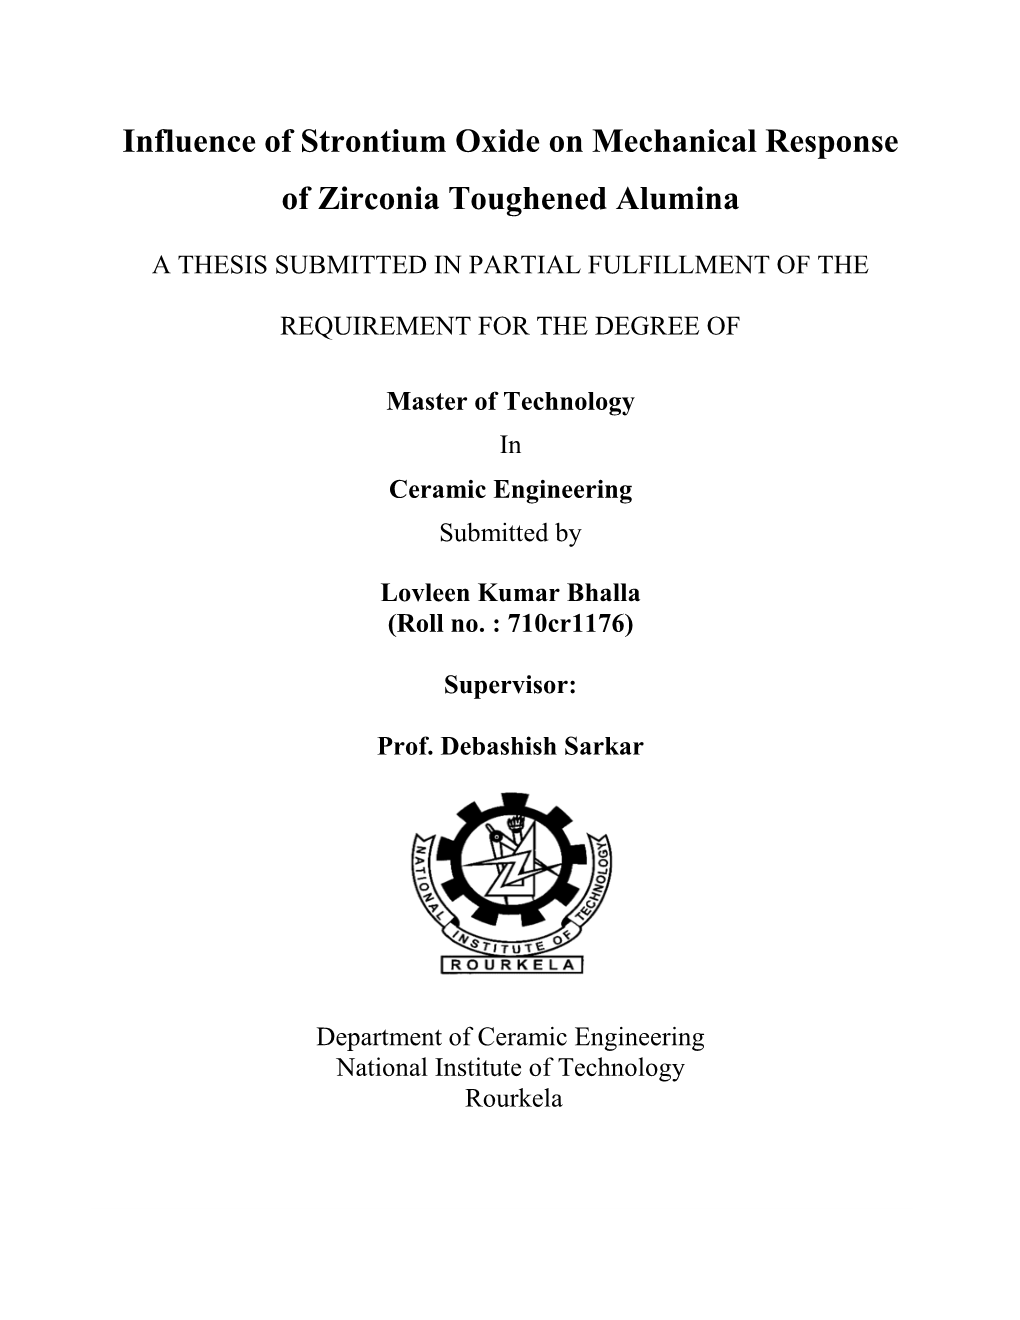 Influence of Strontium Oxide on Mechanical Response of Zirconia Toughened Alumina